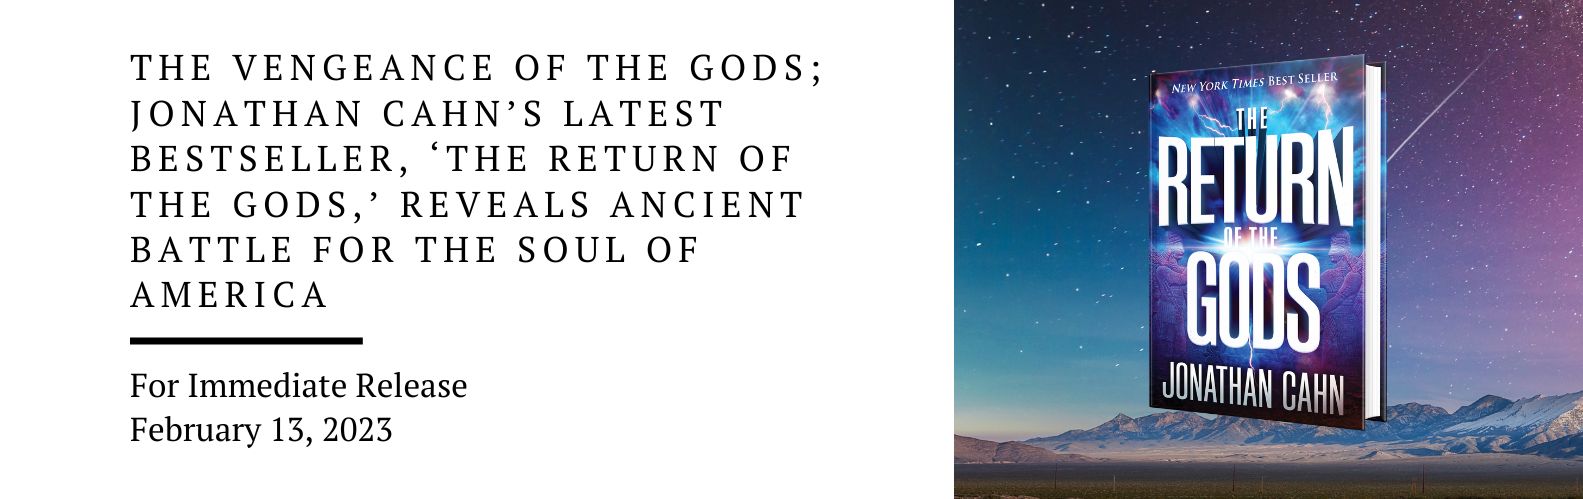 The vengeance of the gods; Jonathan Cahn’s latest bestseller, ‘The Return of the Gods,’ reveals ancient battle for the soul of America